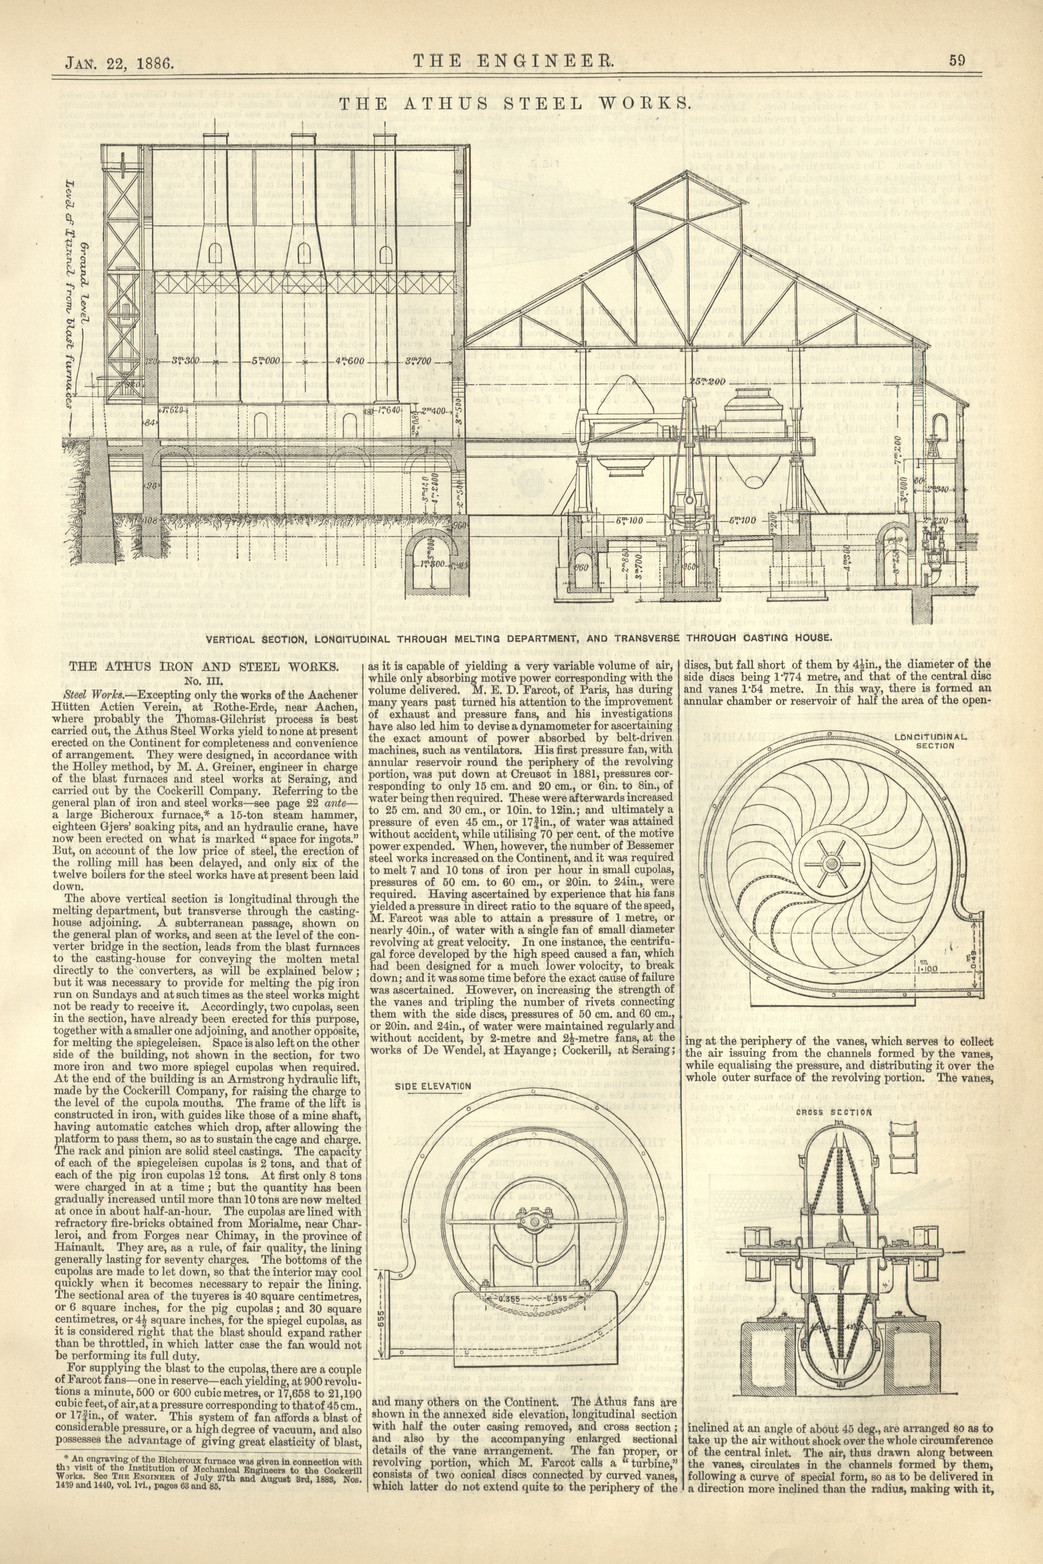 The Engineer, Vol. 61, 22 January